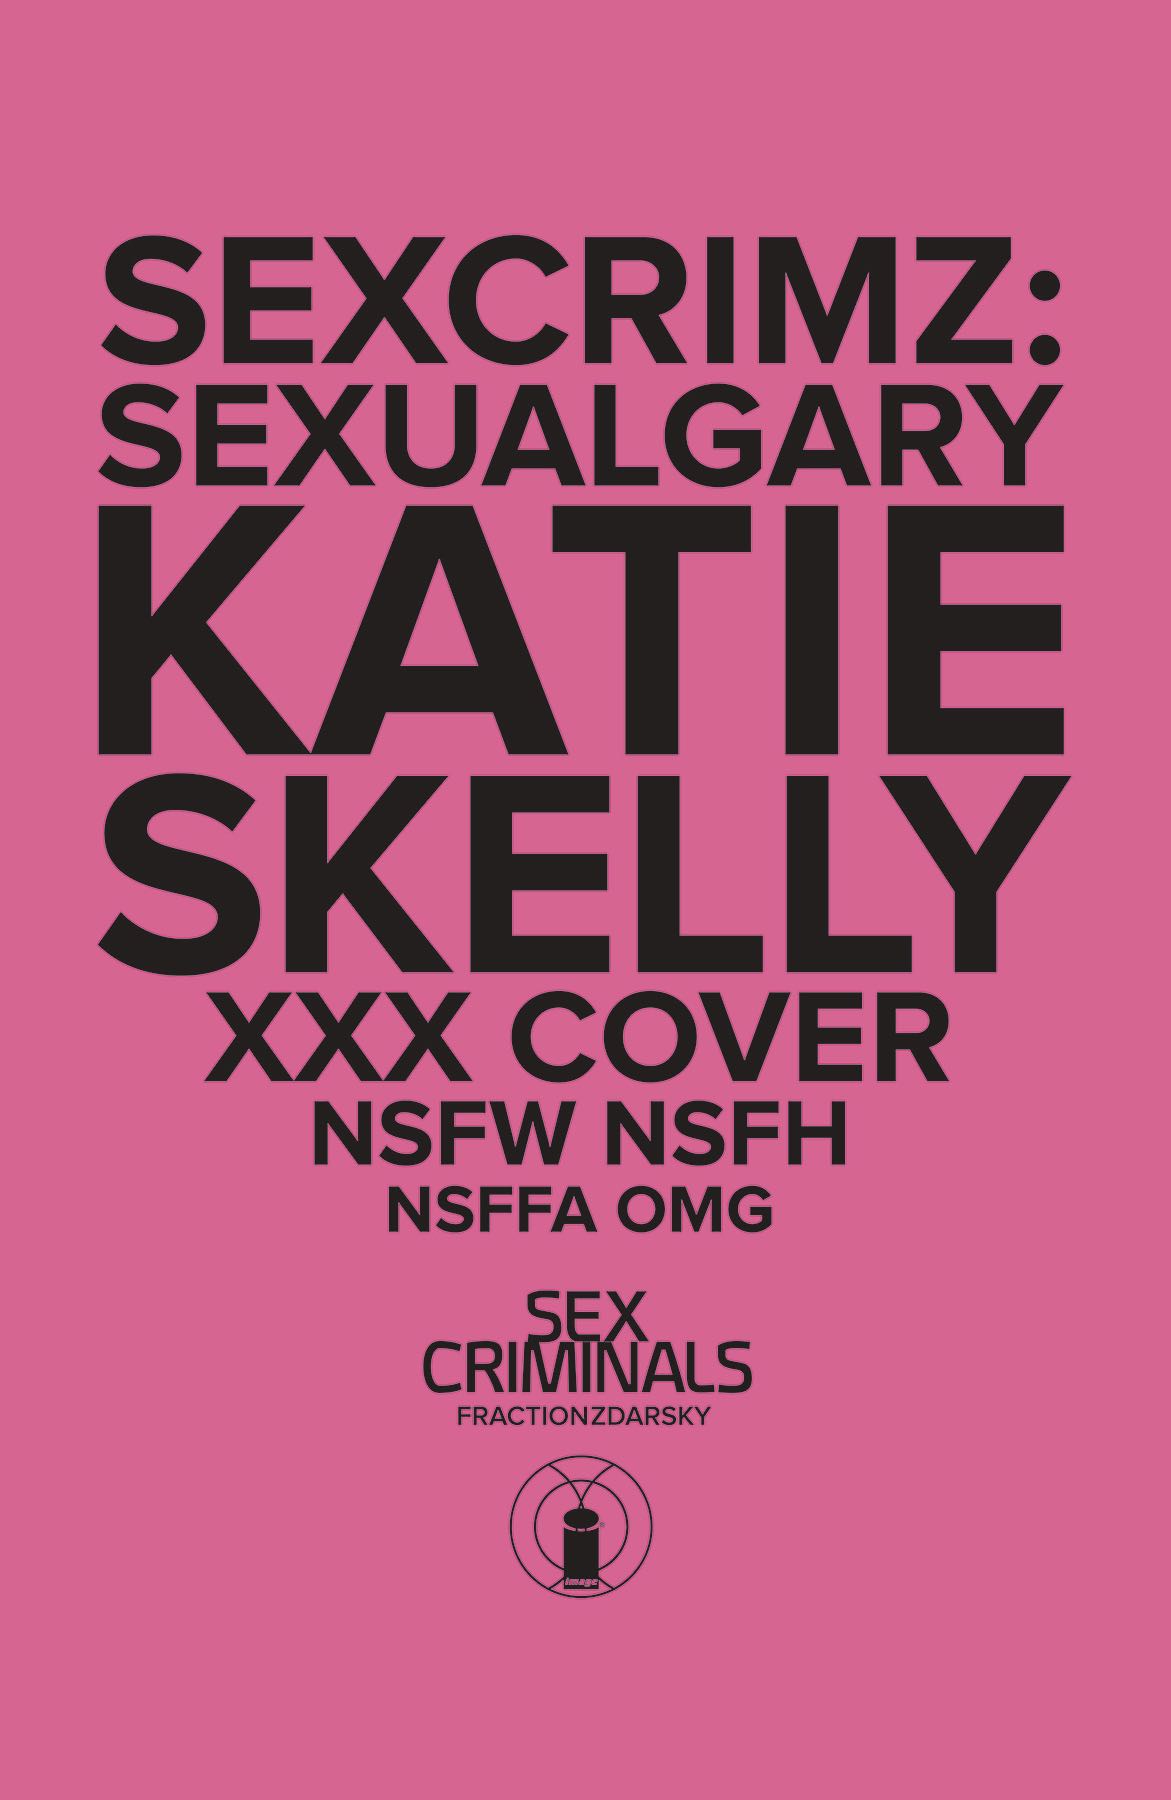 Sex Criminals Sexual Gary Xxx Skelly Cover Fresh Comics